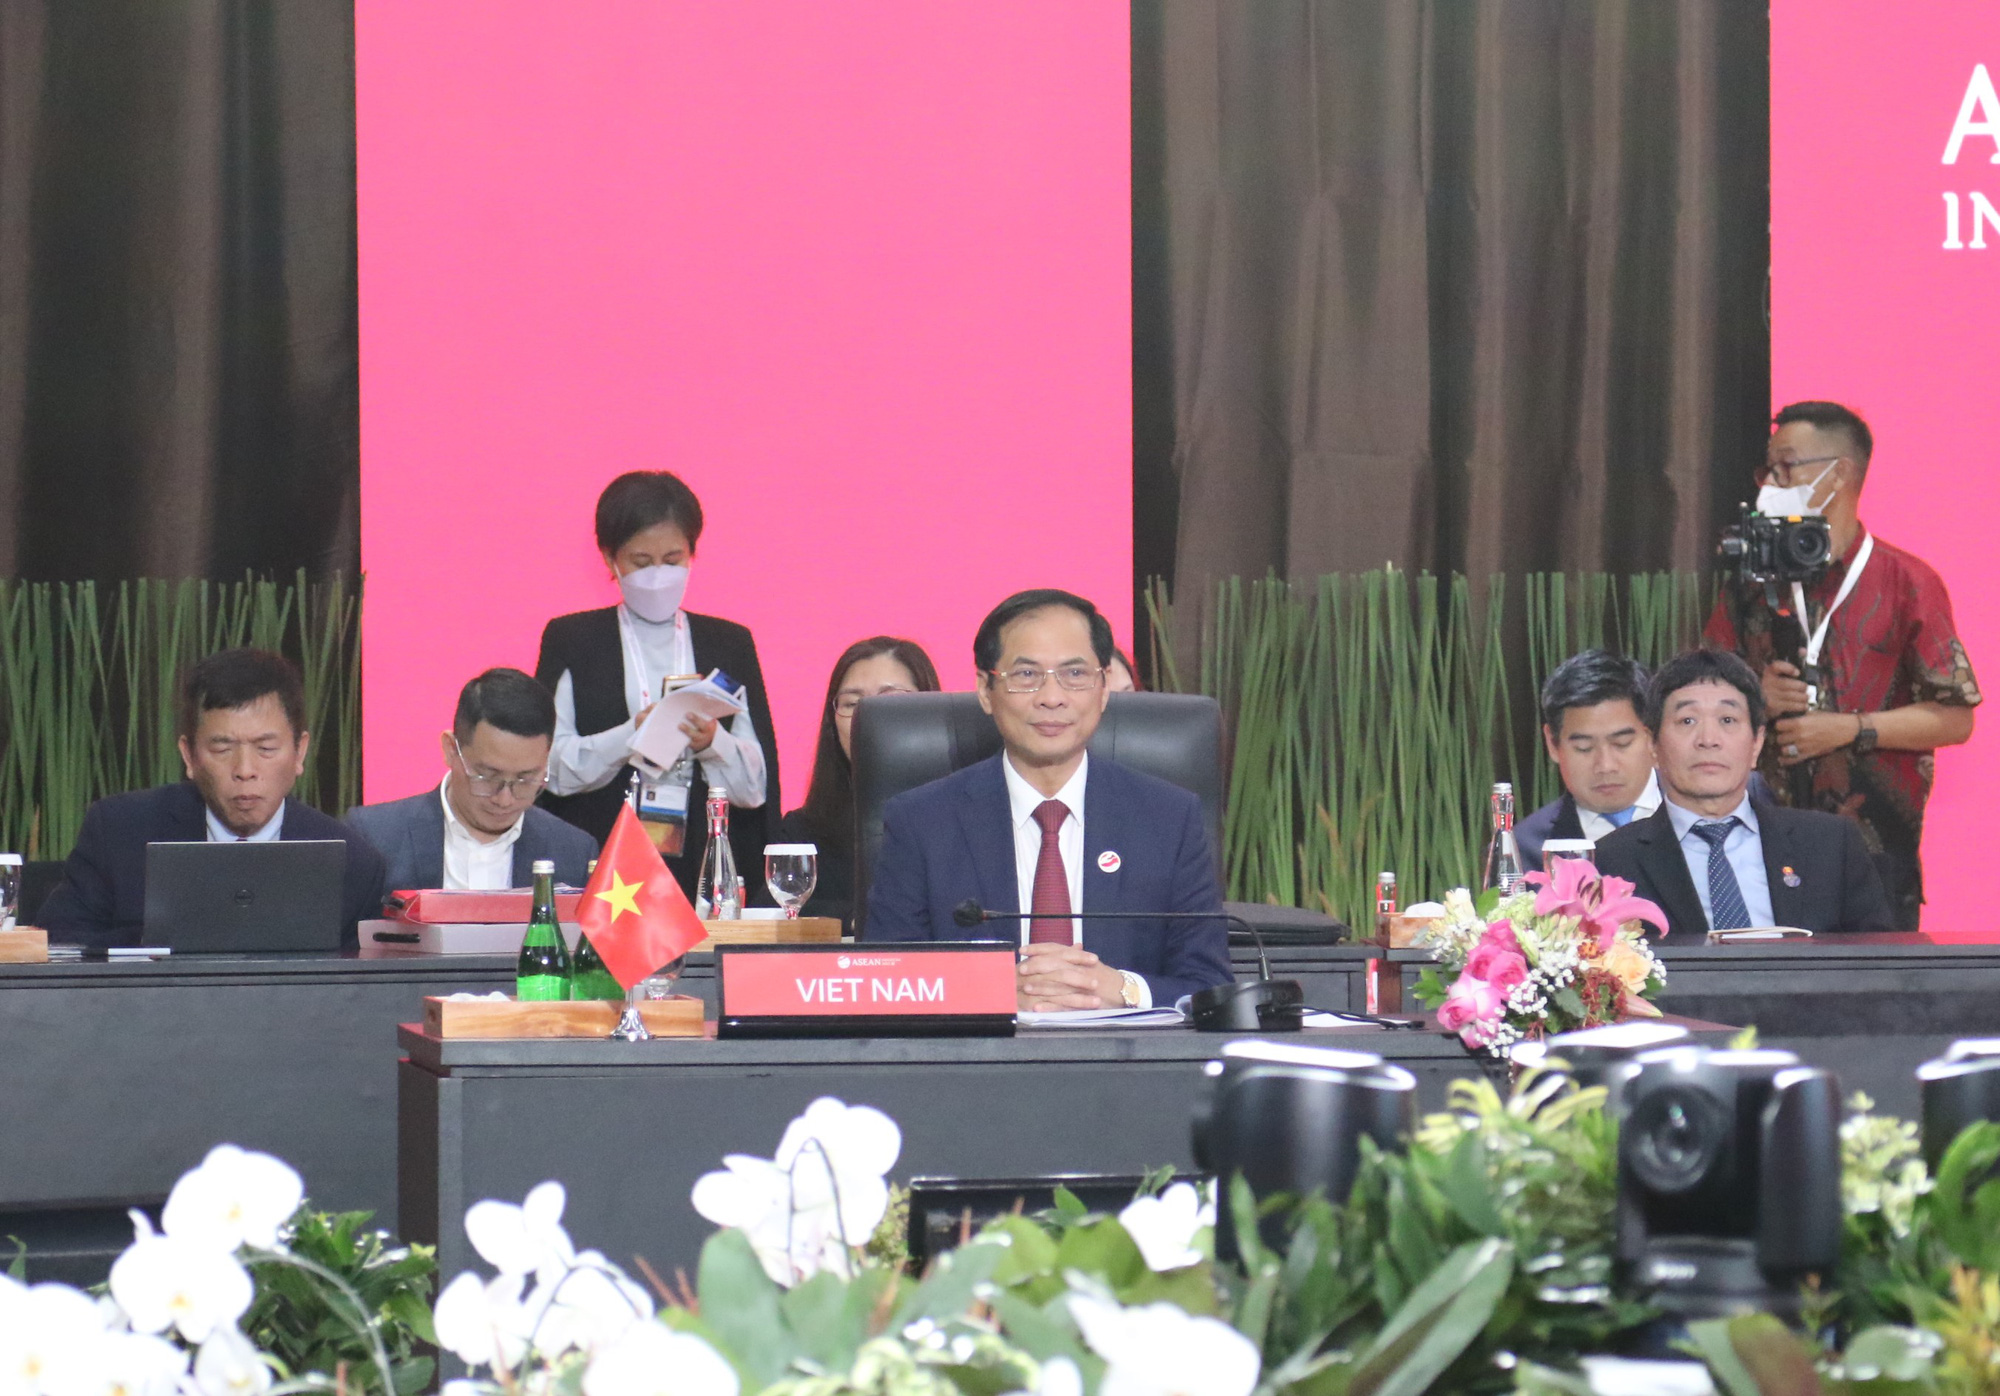 ASEAN Foreign Minister discusses ways to admit Timor Leste - Photo 1.